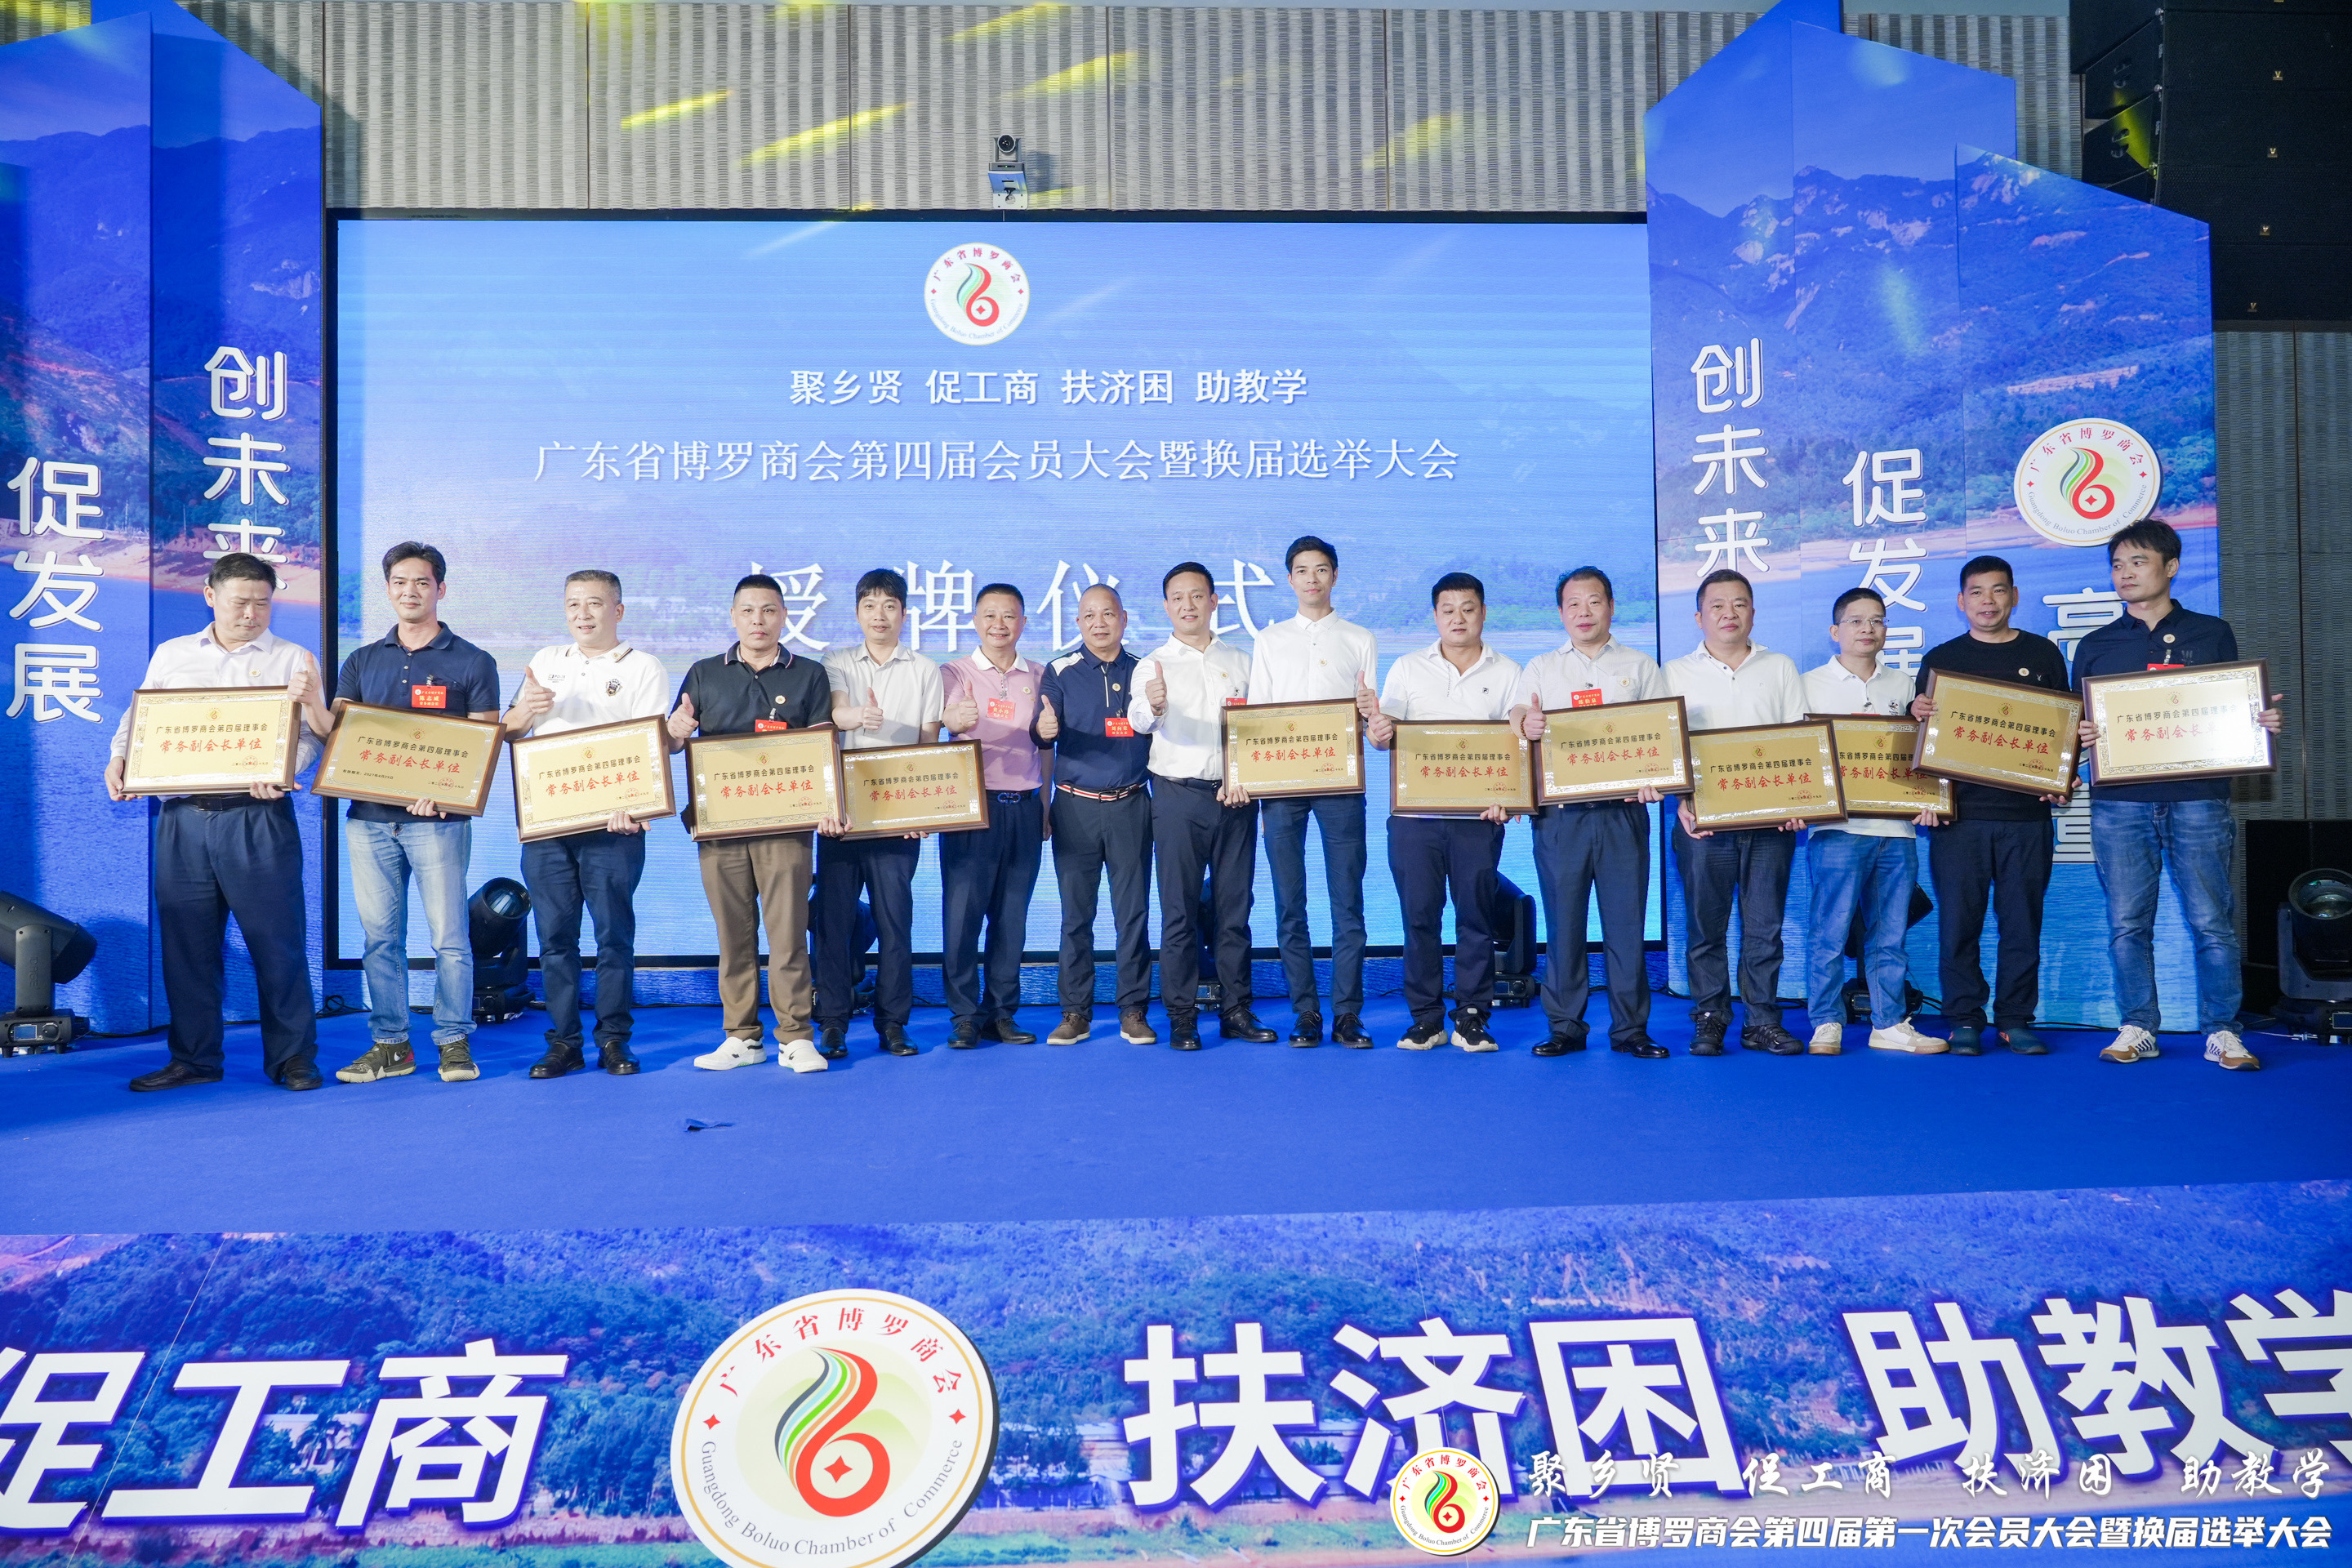  Dongguan Gaohua Eco Packaging நிறுவனம் 2023 இல் தொலைதூரப் பகுதி மாணவர்களுக்காக நிதி வழங்கியது-வீட்டுப் பெட்டிகள்/காகிதப் பெட்டிகள்/பழப் பெட்டிகள்/ அட்டைப்பெட்டிகள் 